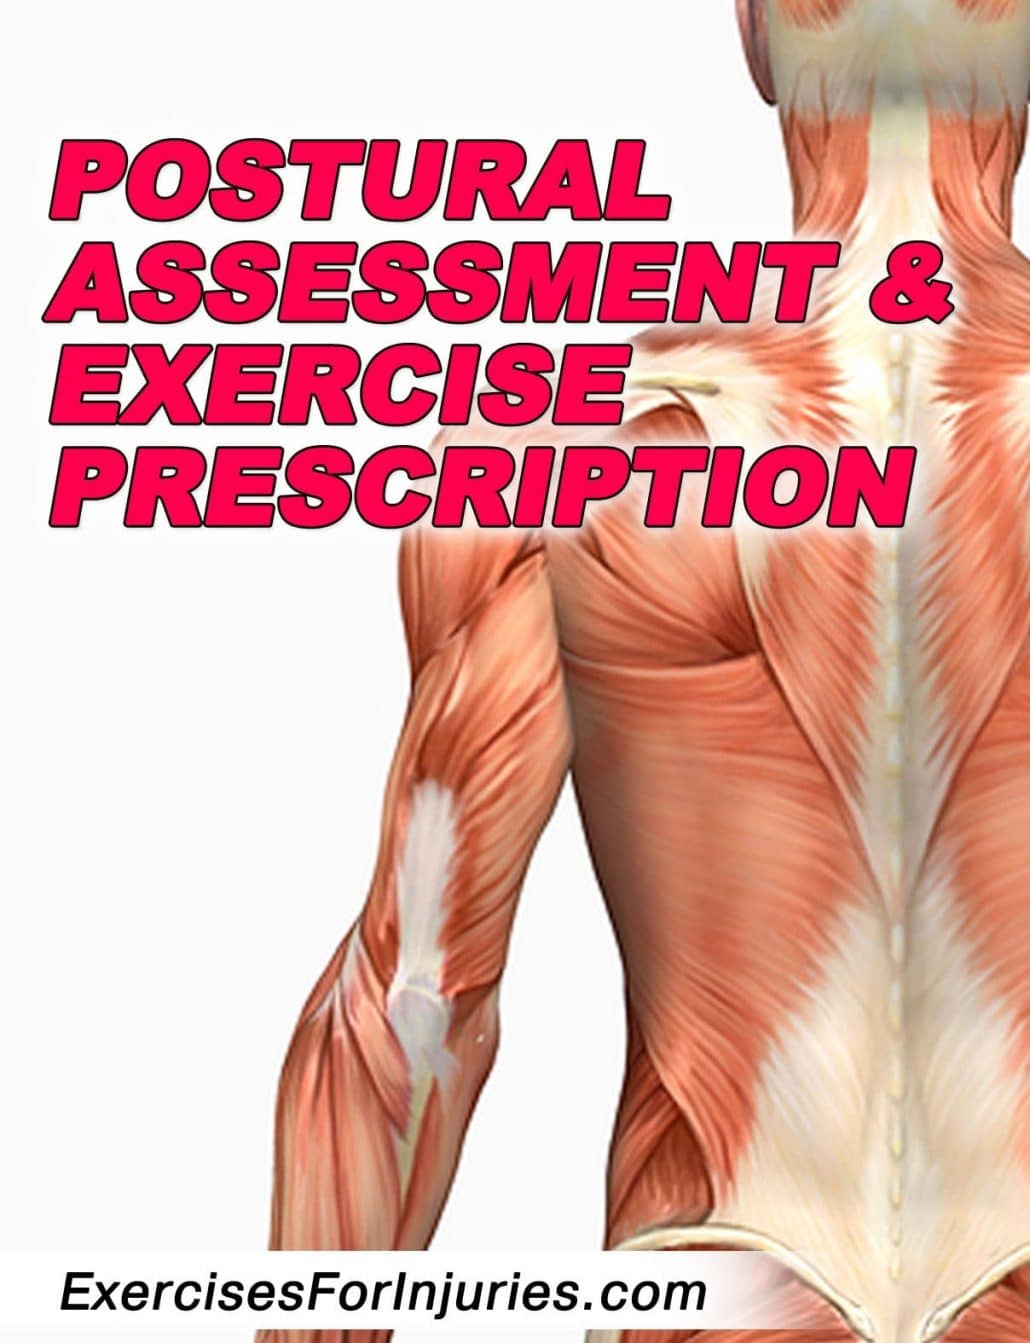 postural-assessment-course-image